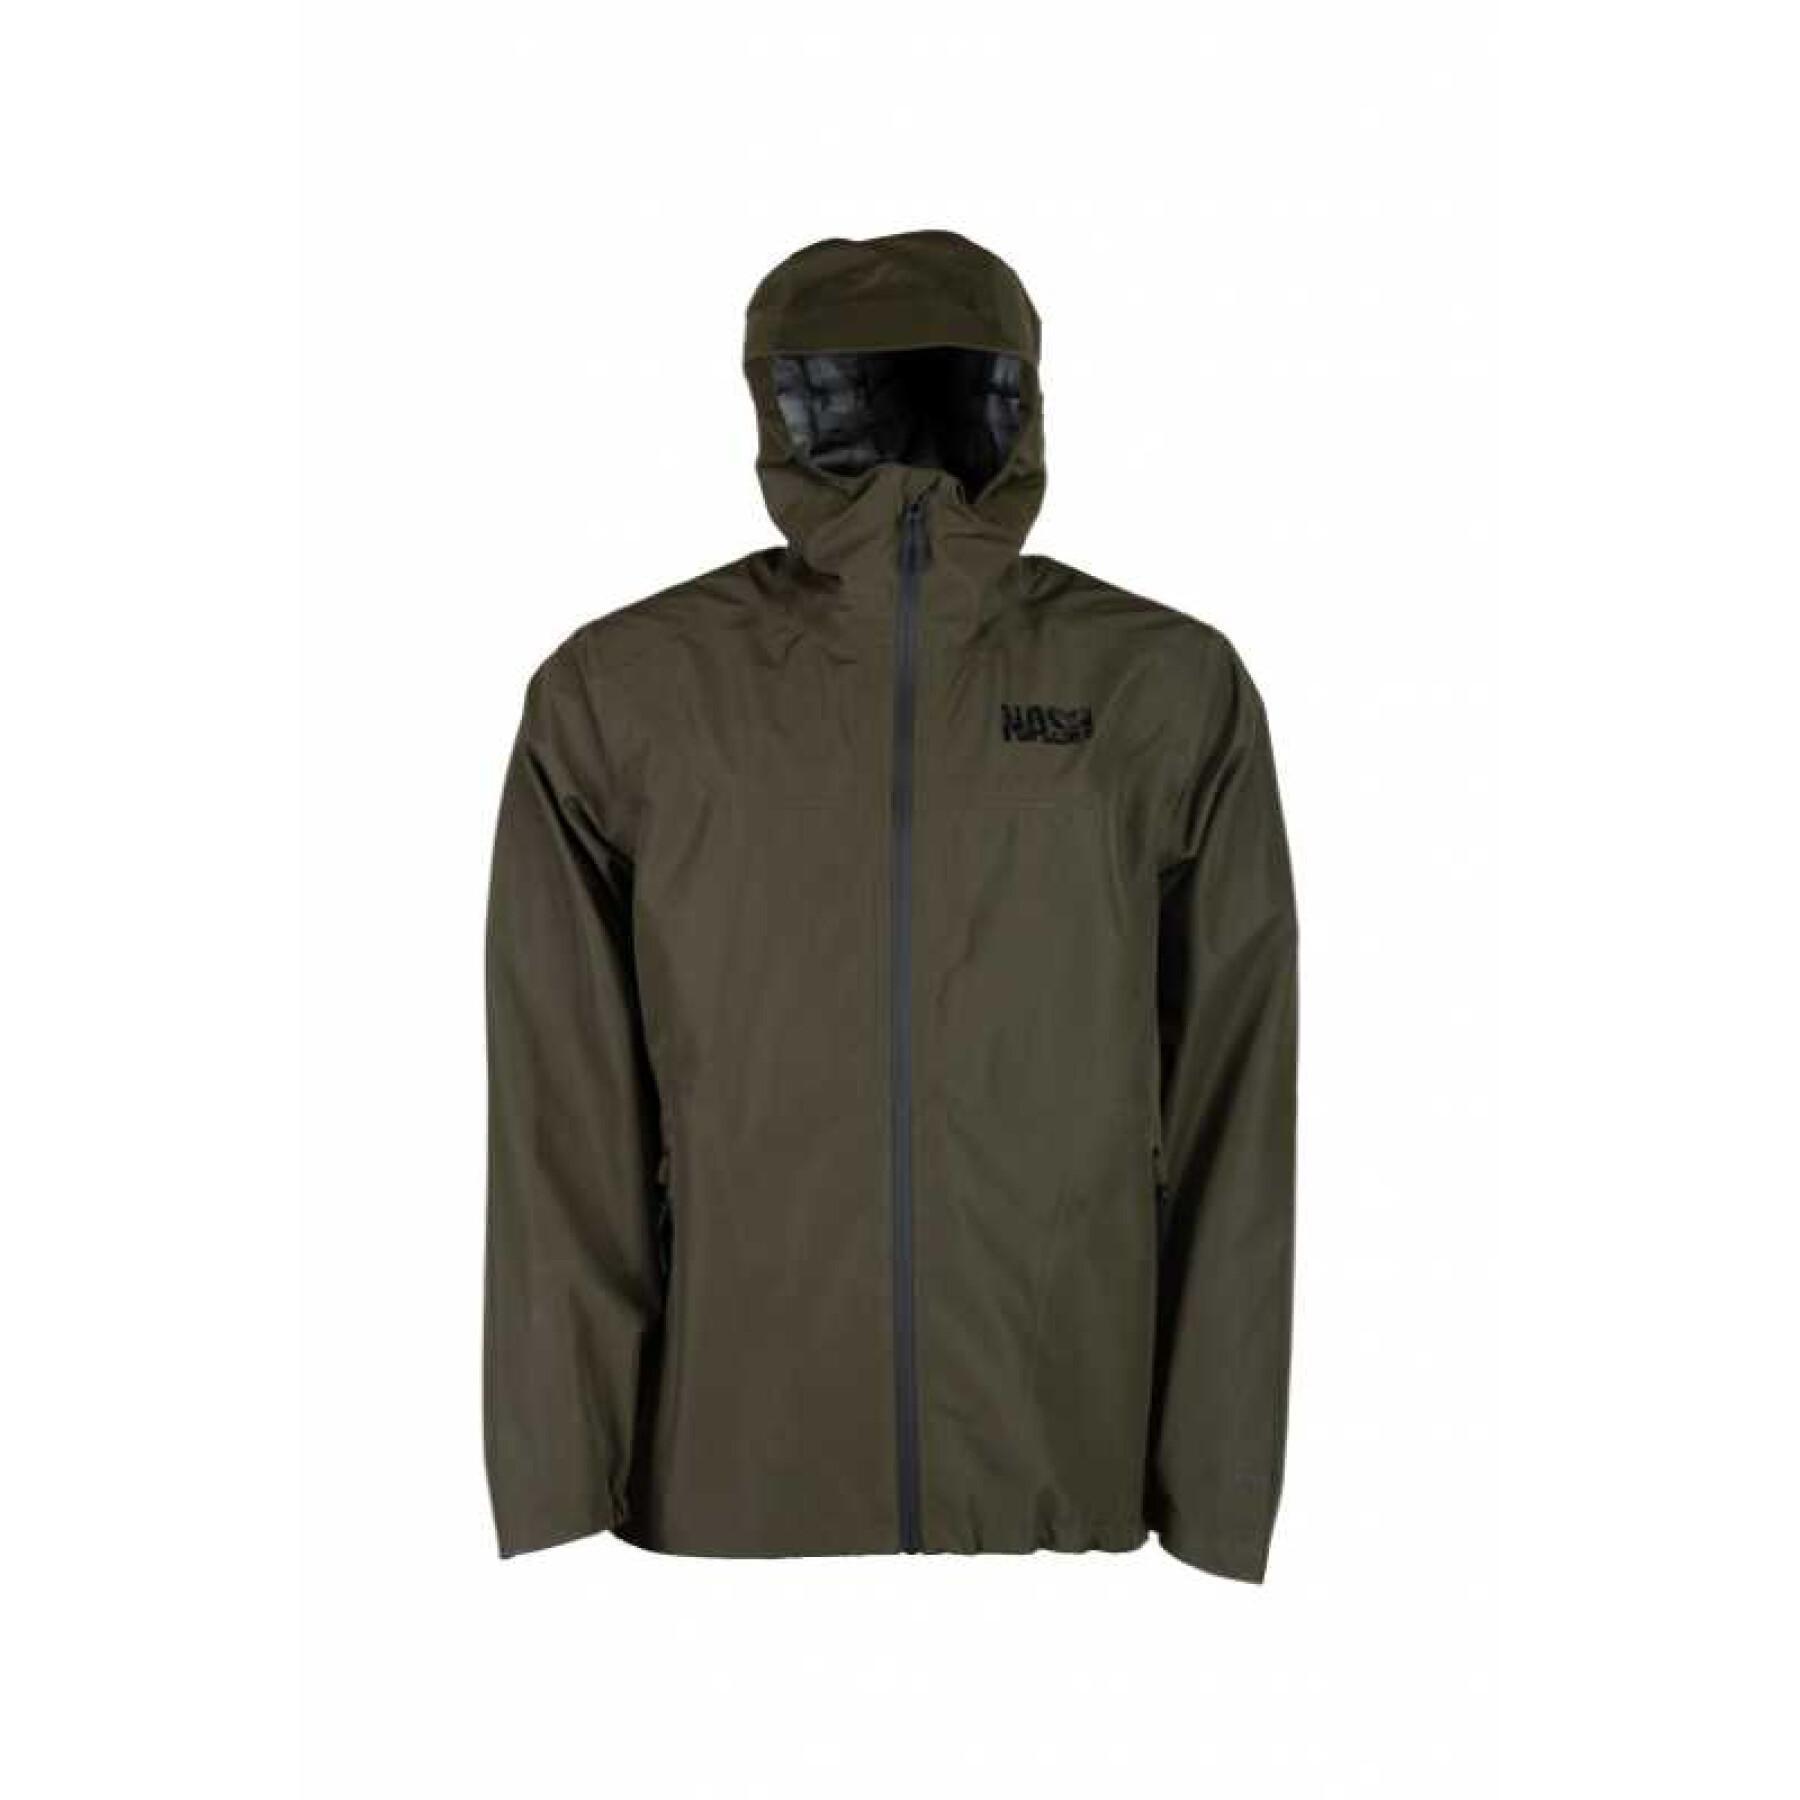 Waterproof jacket ZT extreme